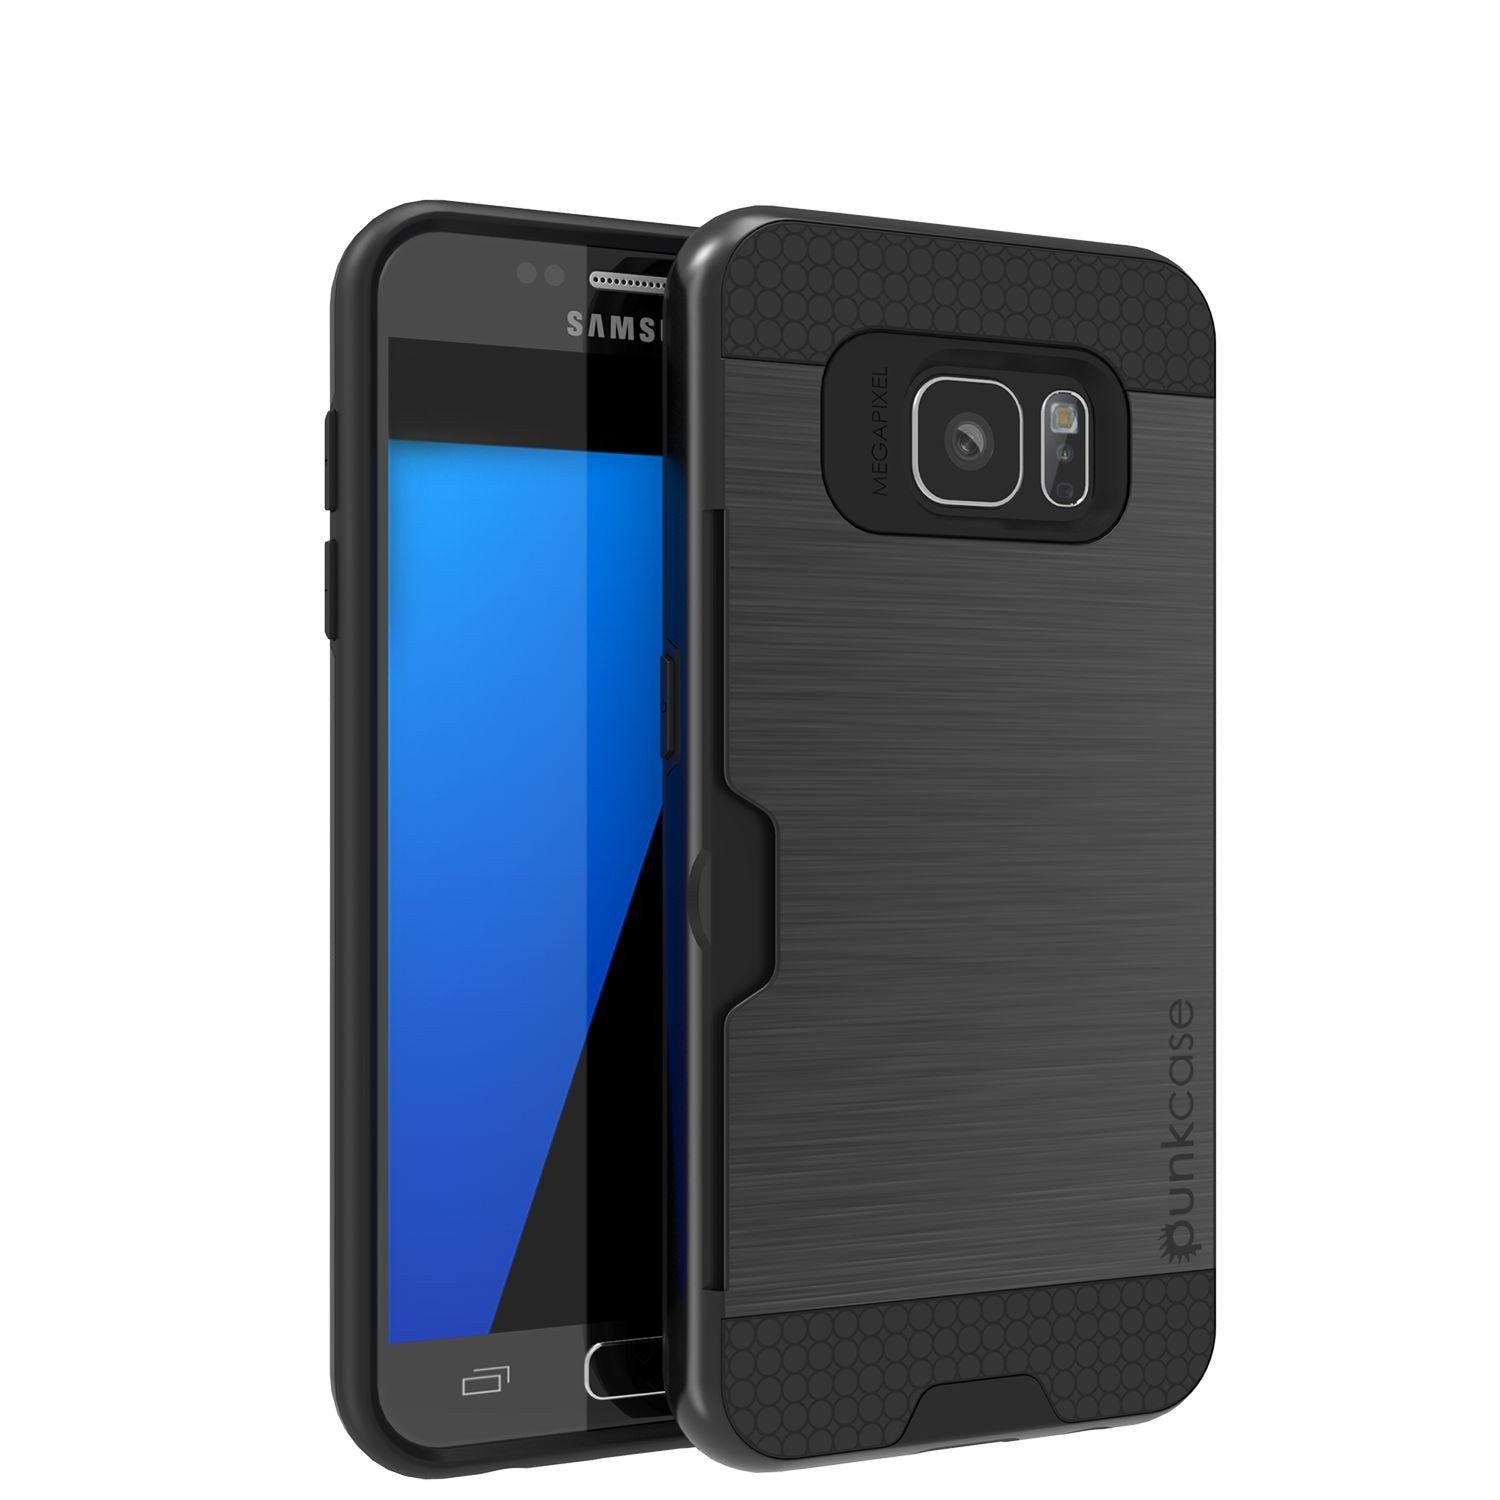 Galaxy s7 EDGE Case PunkCase SLOT Black Series Slim Armor Soft Cover Case